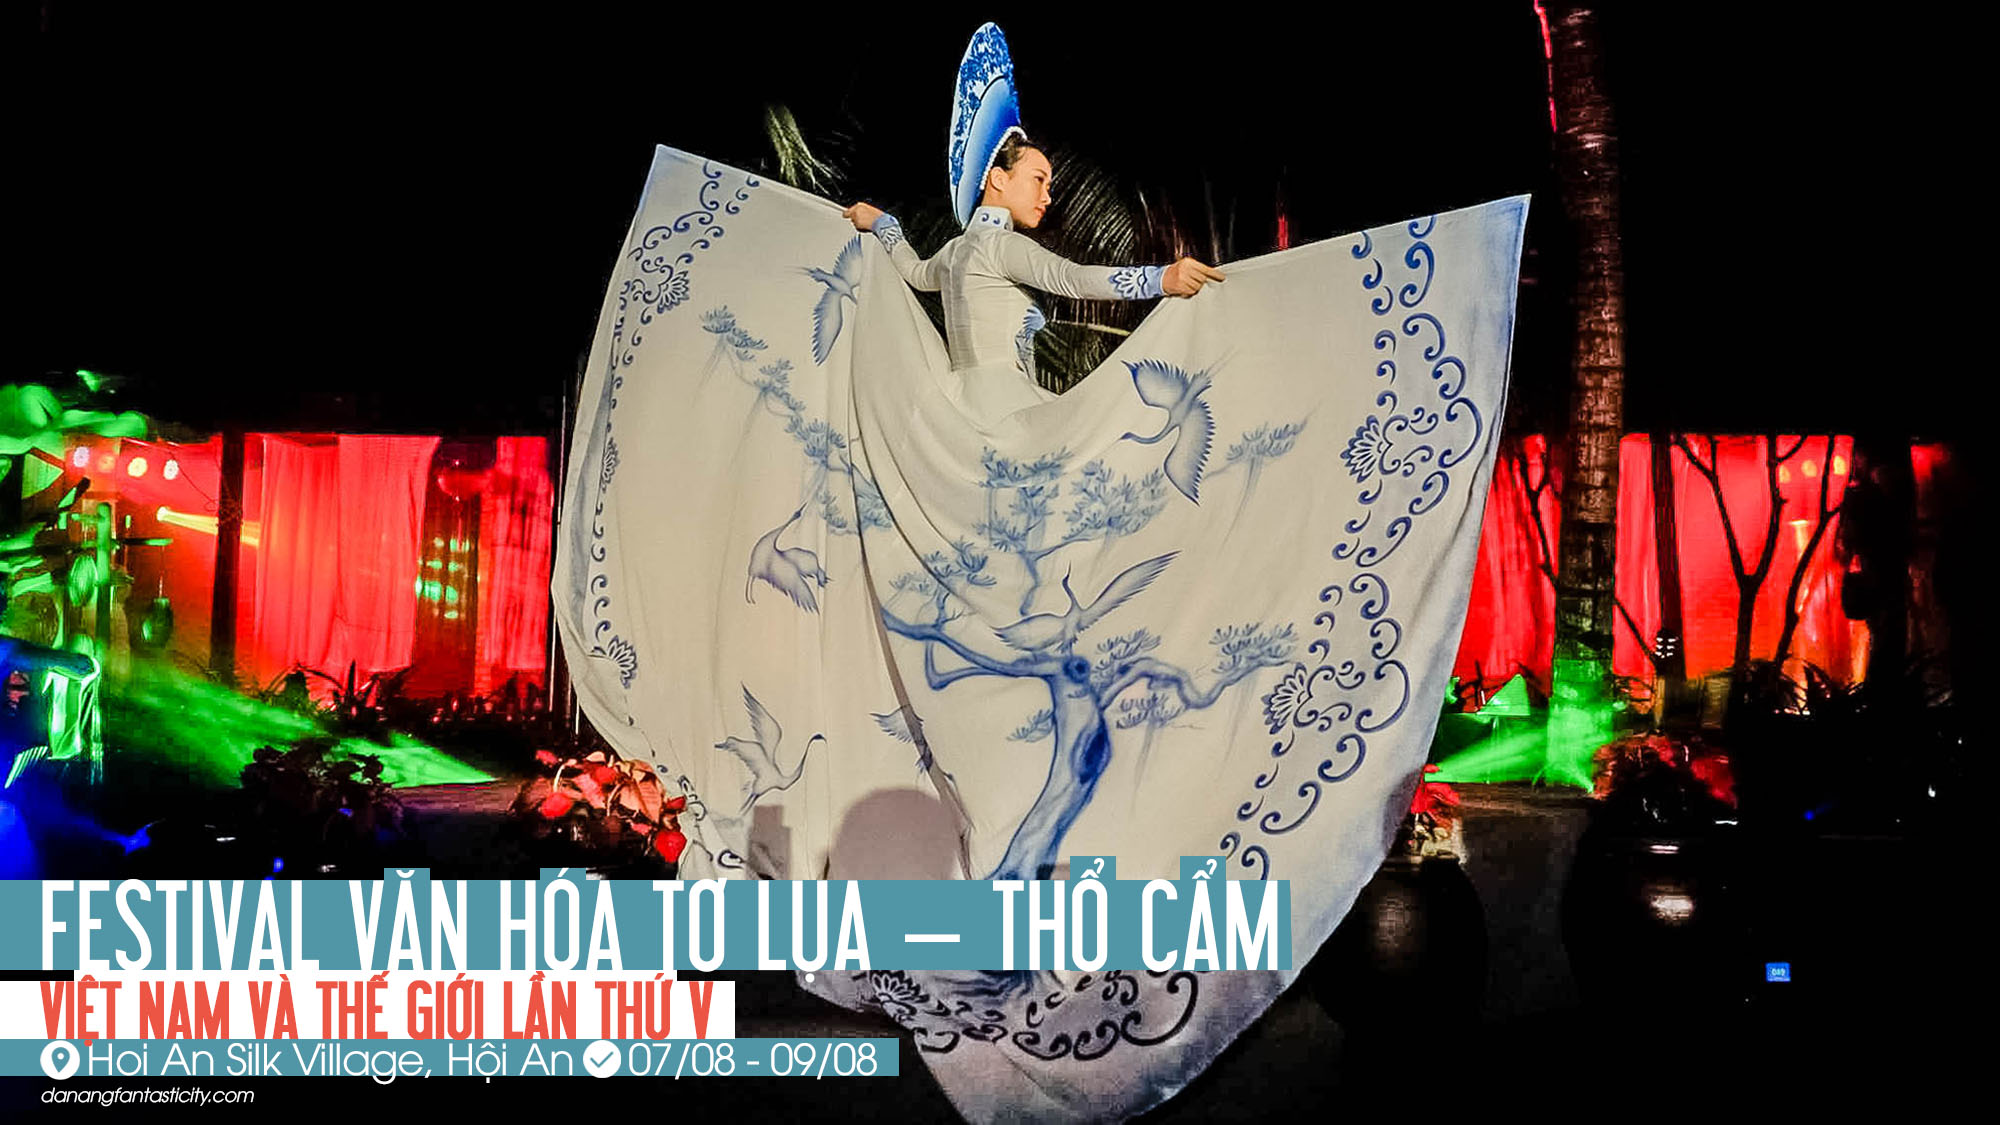 Festival Van Hoa To Lua Tho Cam Viet Nam Va The Gioi Lan Thu 5 Tai Hoi An Silk Village Danang Fantasticity Com